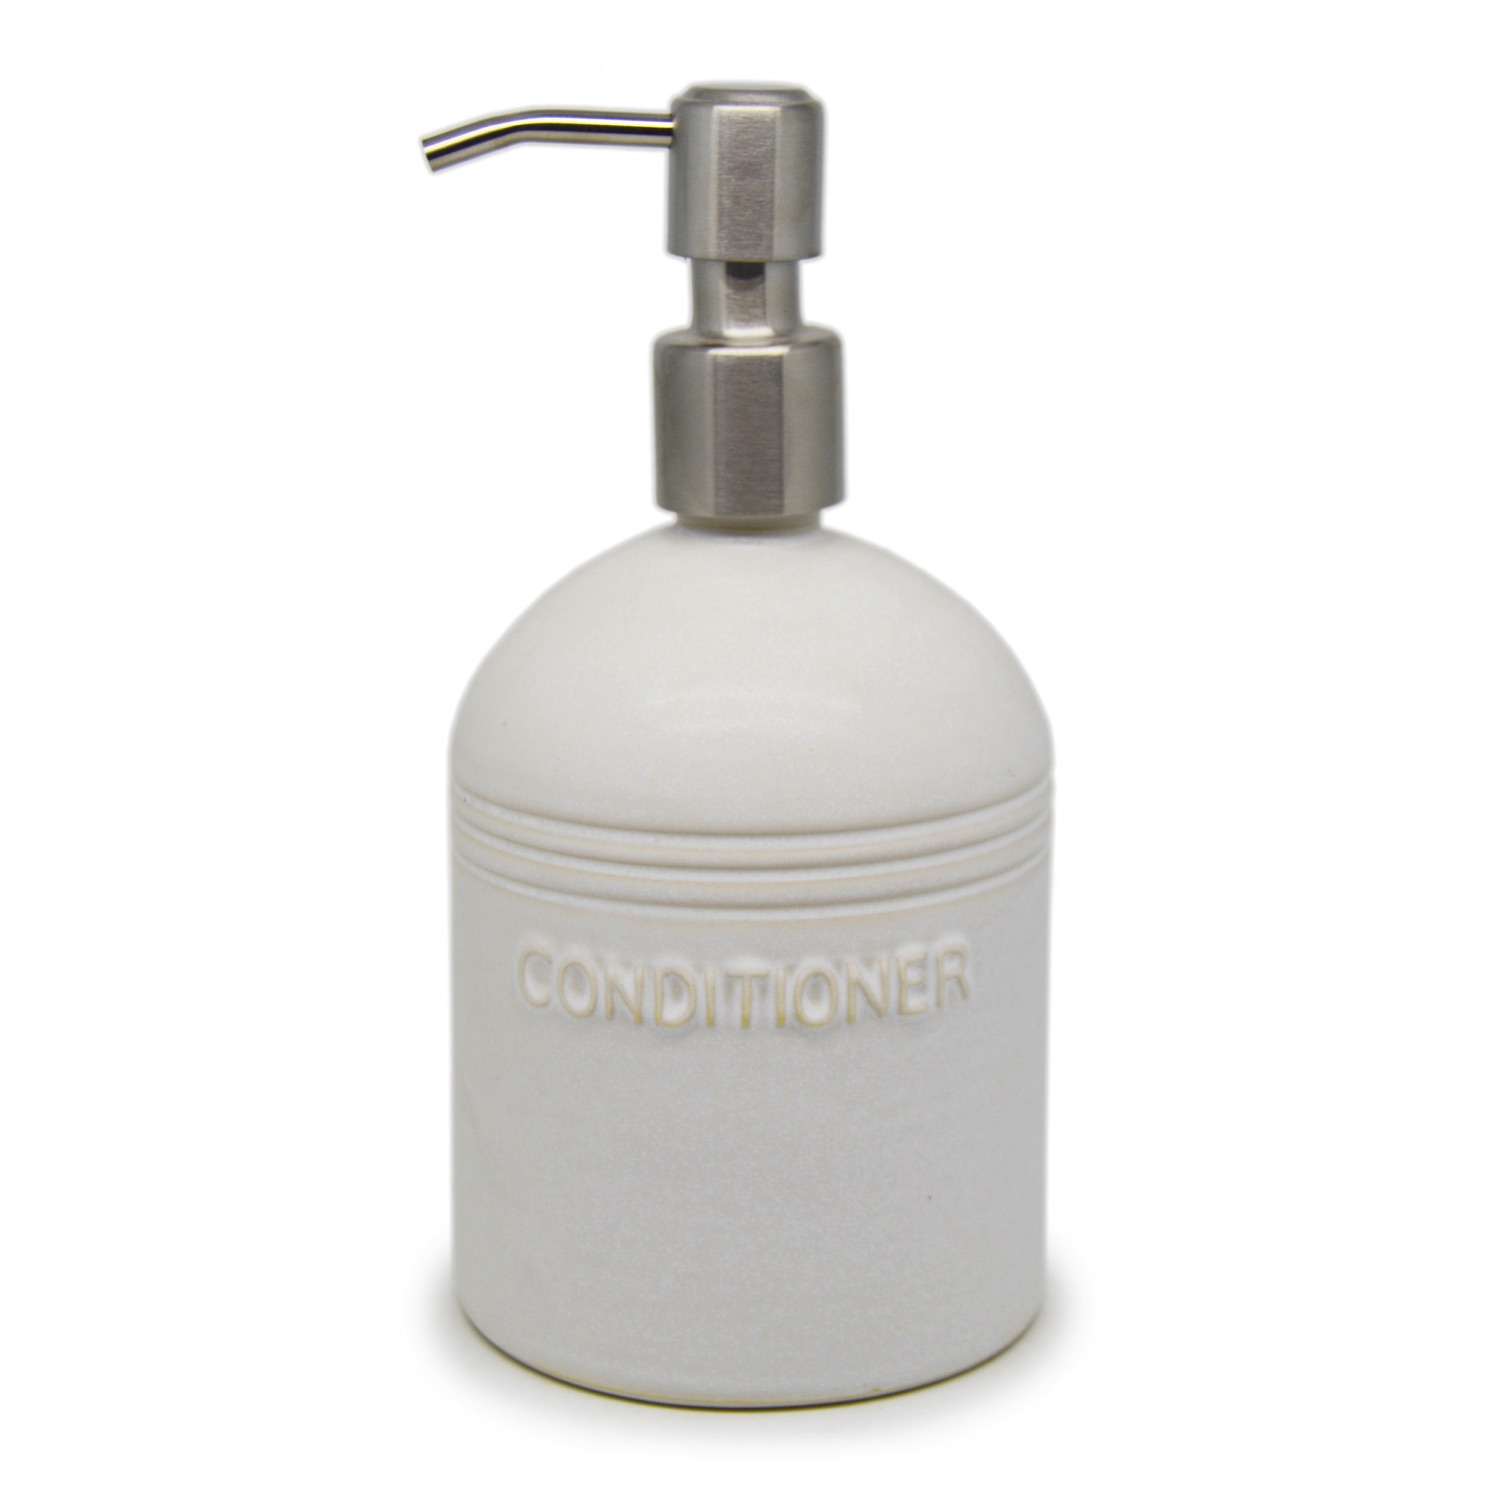 Liquid Dispenser S2 - Conditioner - Stainless Steel Pump